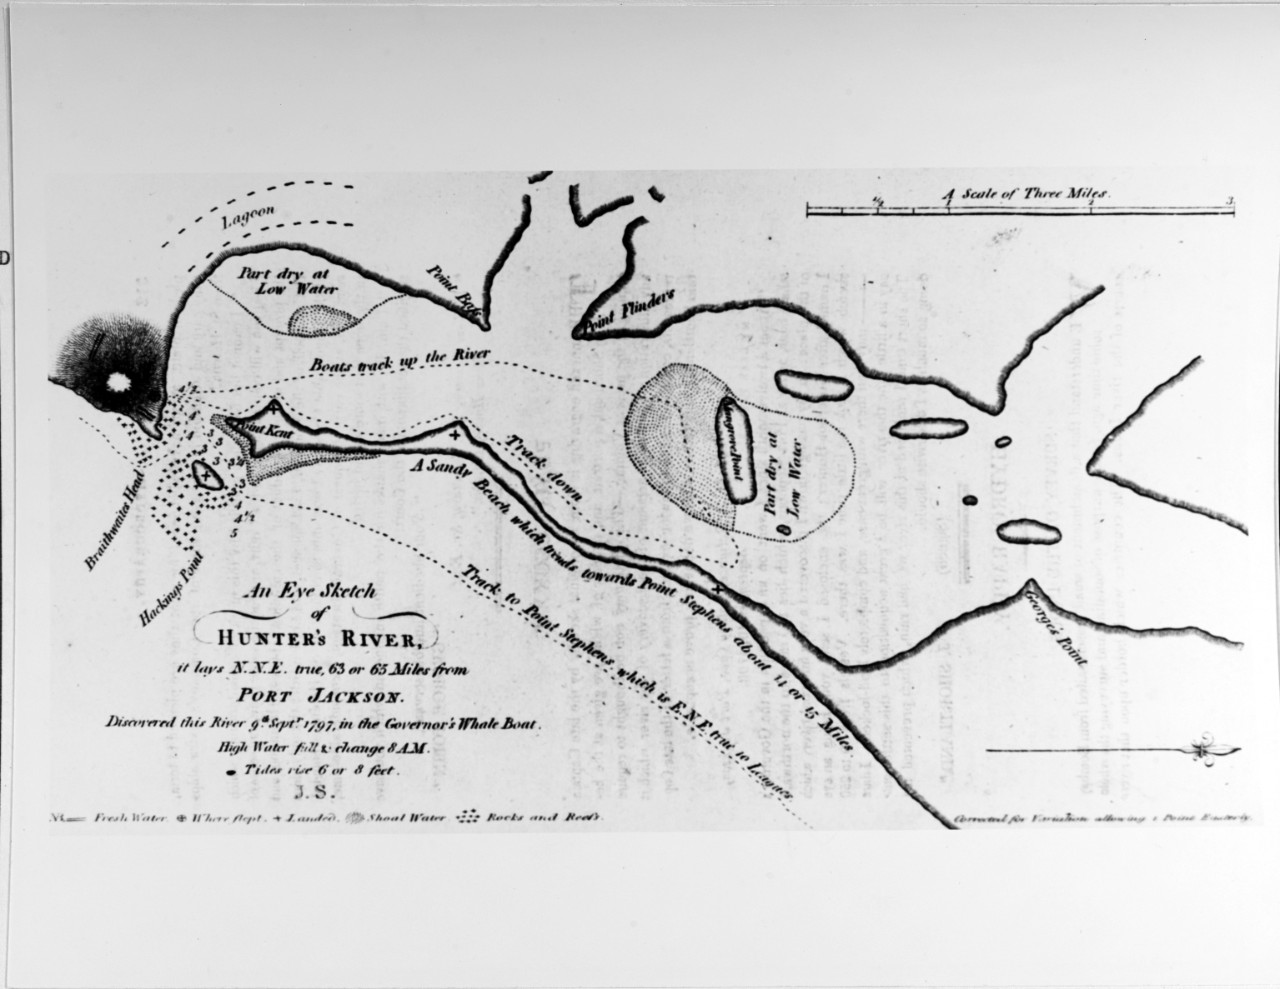 Sketch map of Hunter's River